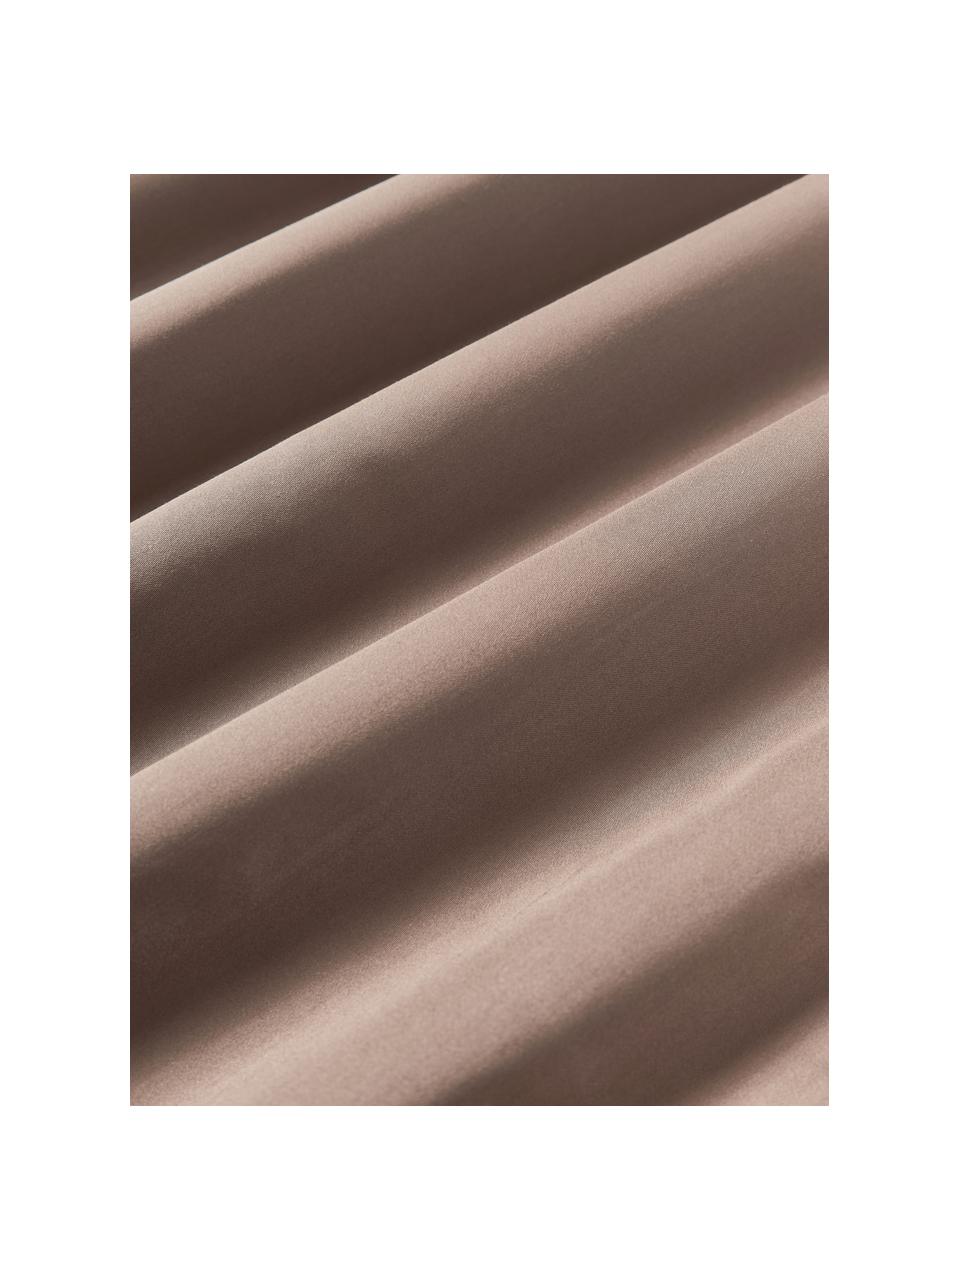 Drap plat en satin de coton brun Comfort, Brun, larg. 180 x long. 280 cm